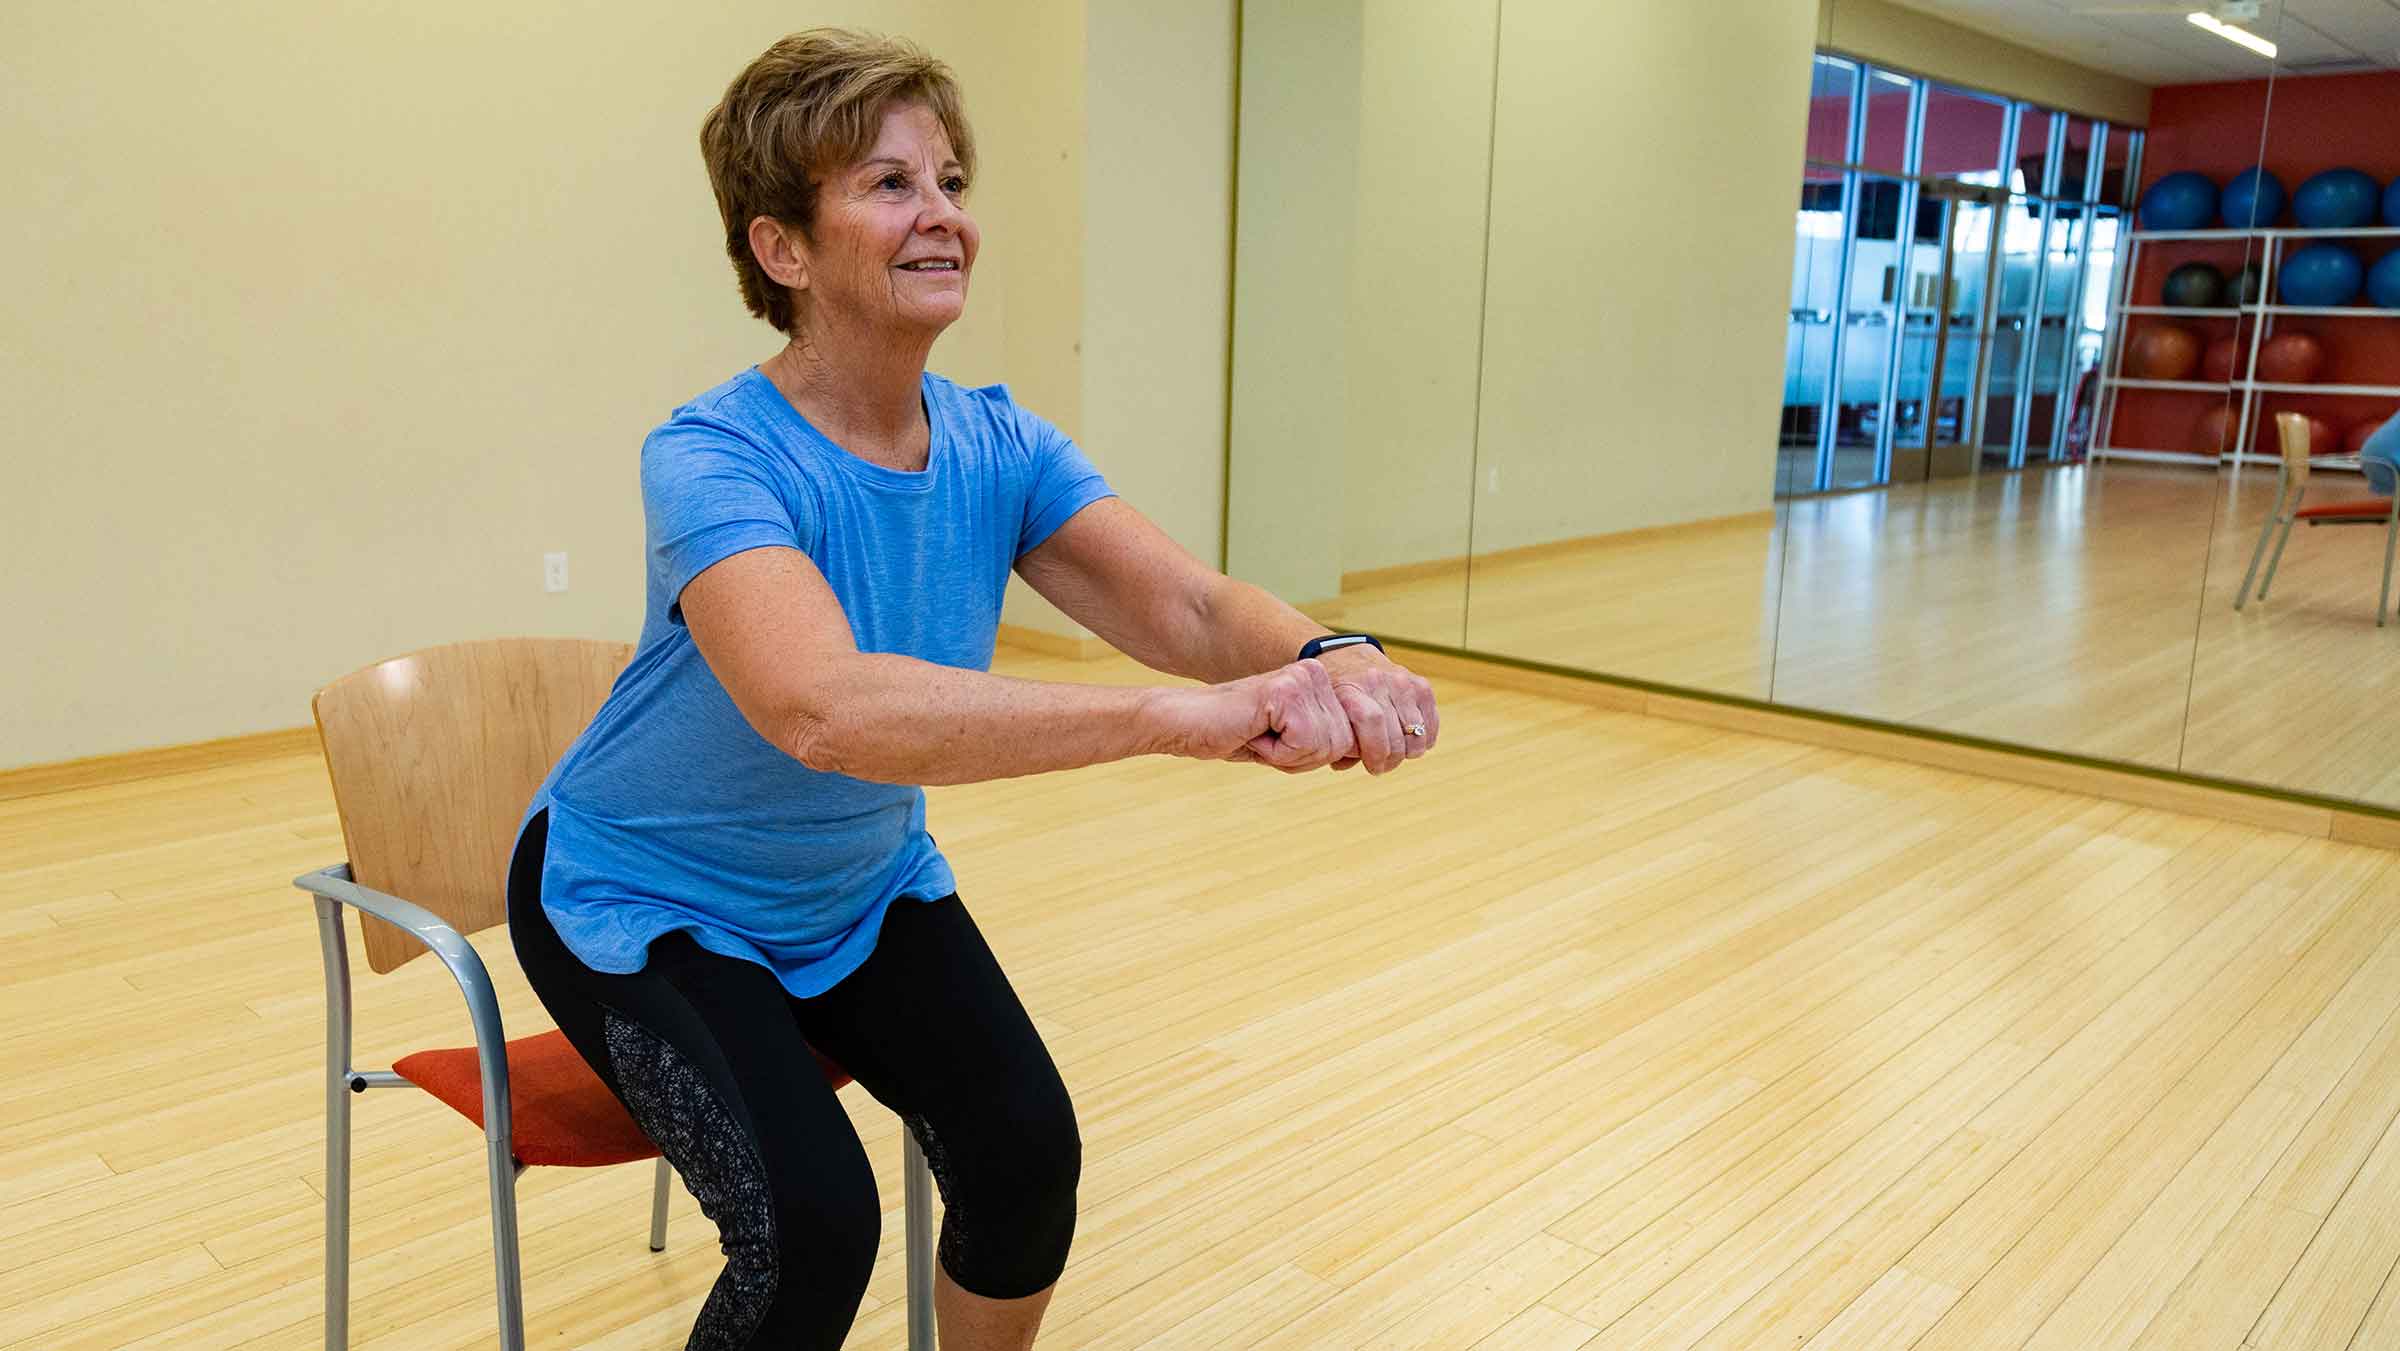 6 Chair Exercises Seniors Can Easily Do